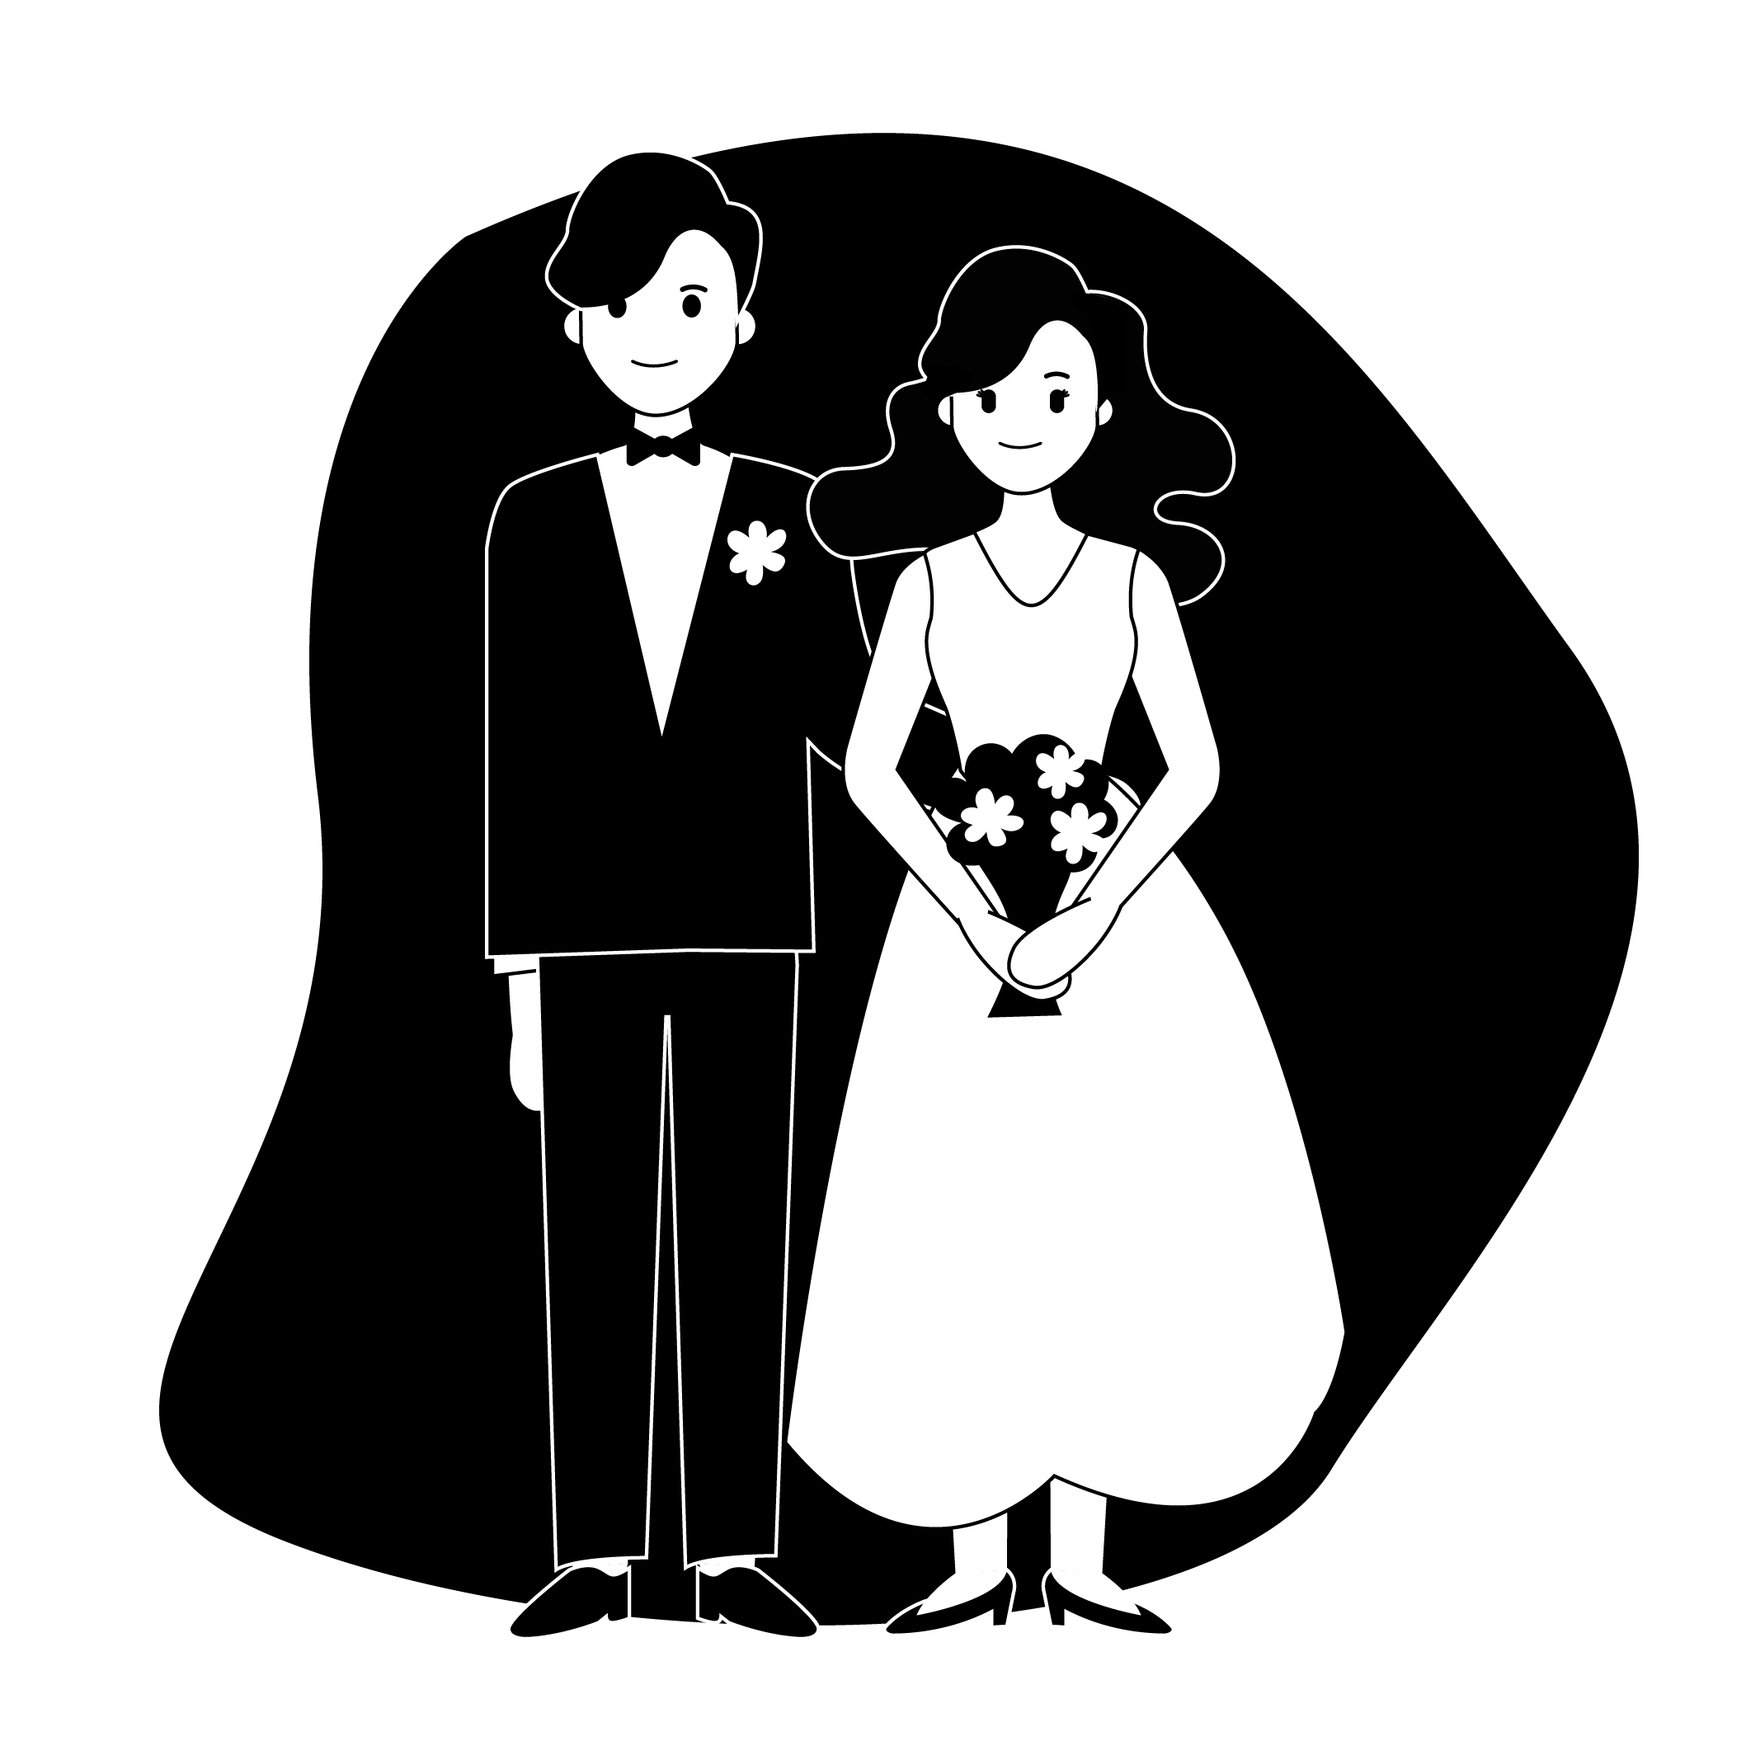 Free Bride And Groom Silhouette in Illustrator, EPS, SVG, JPG, PNG